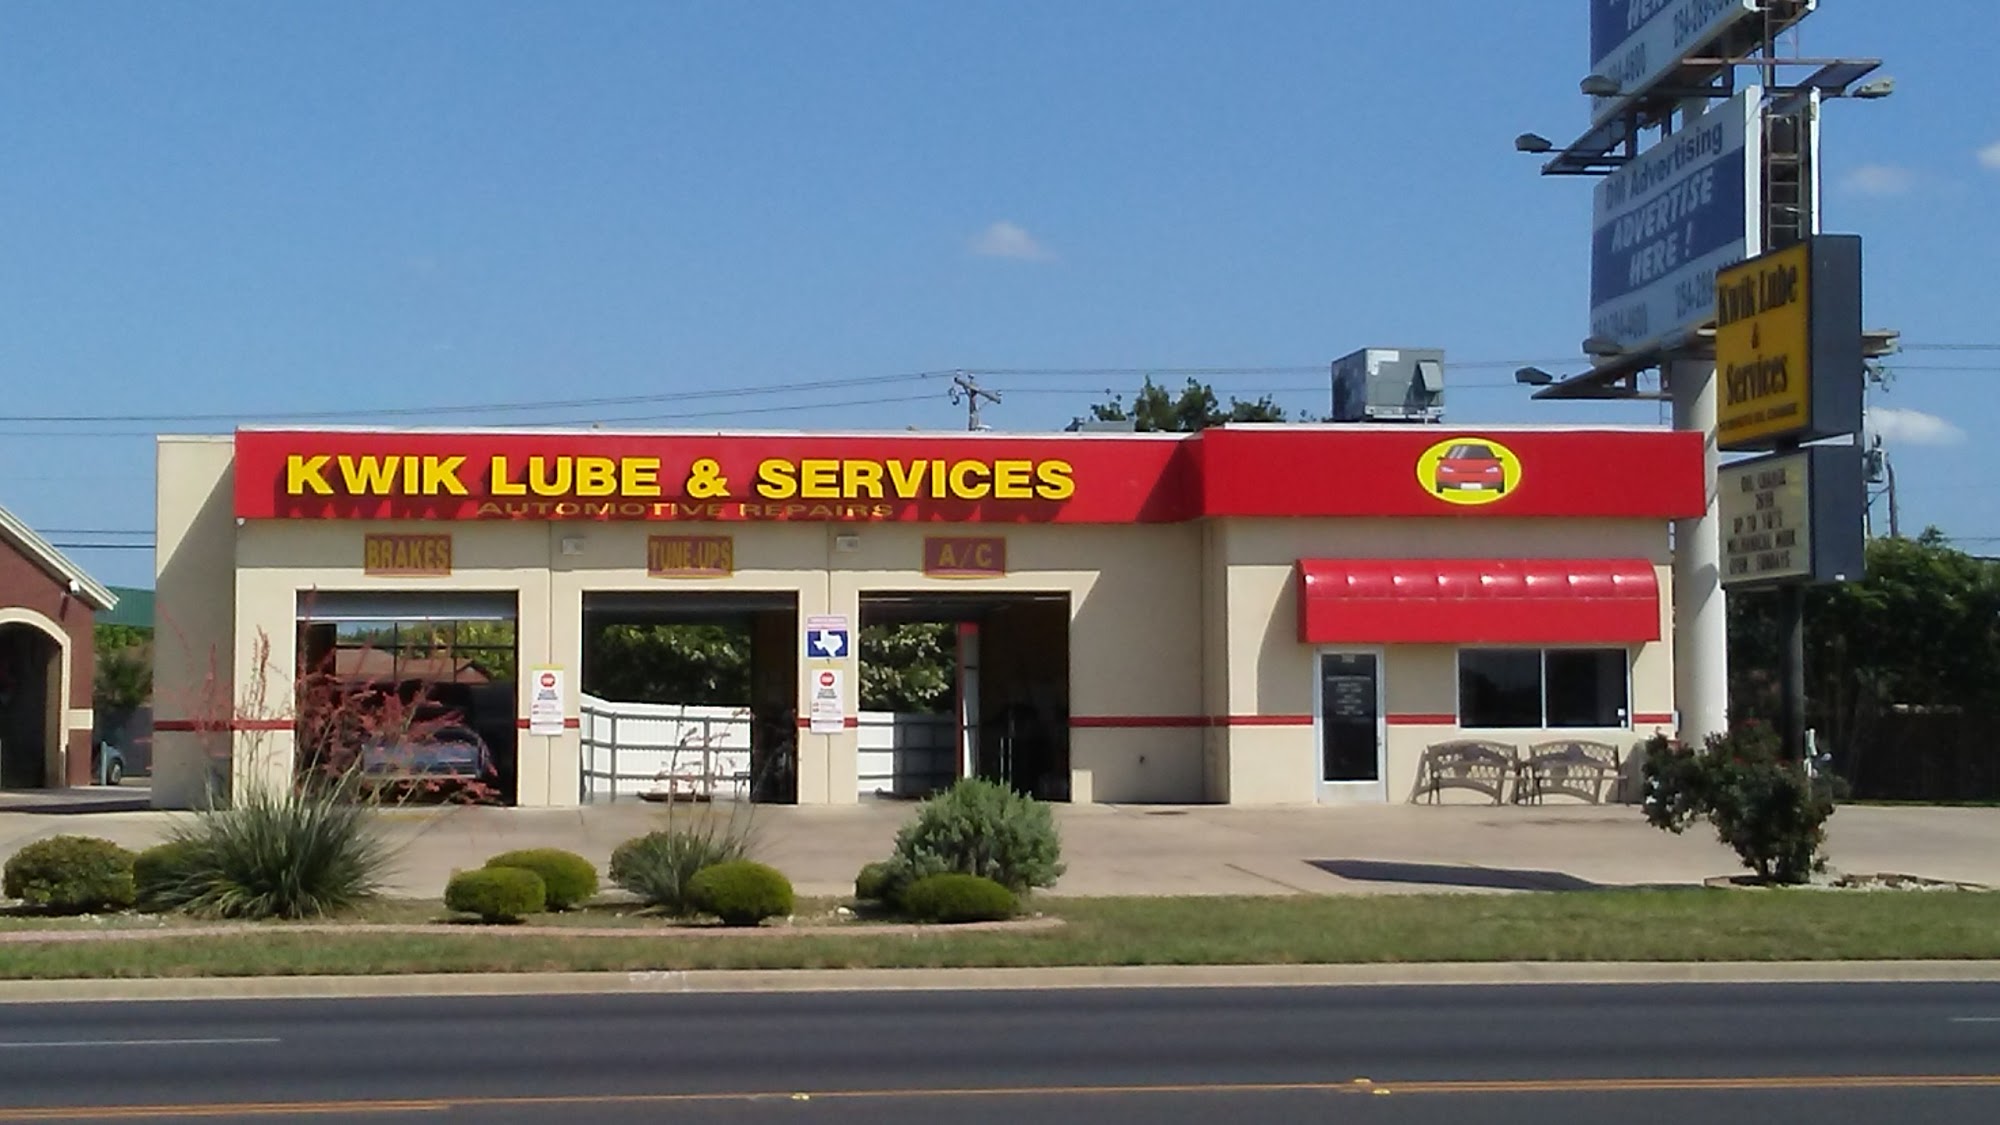 Kwik Lube & Services